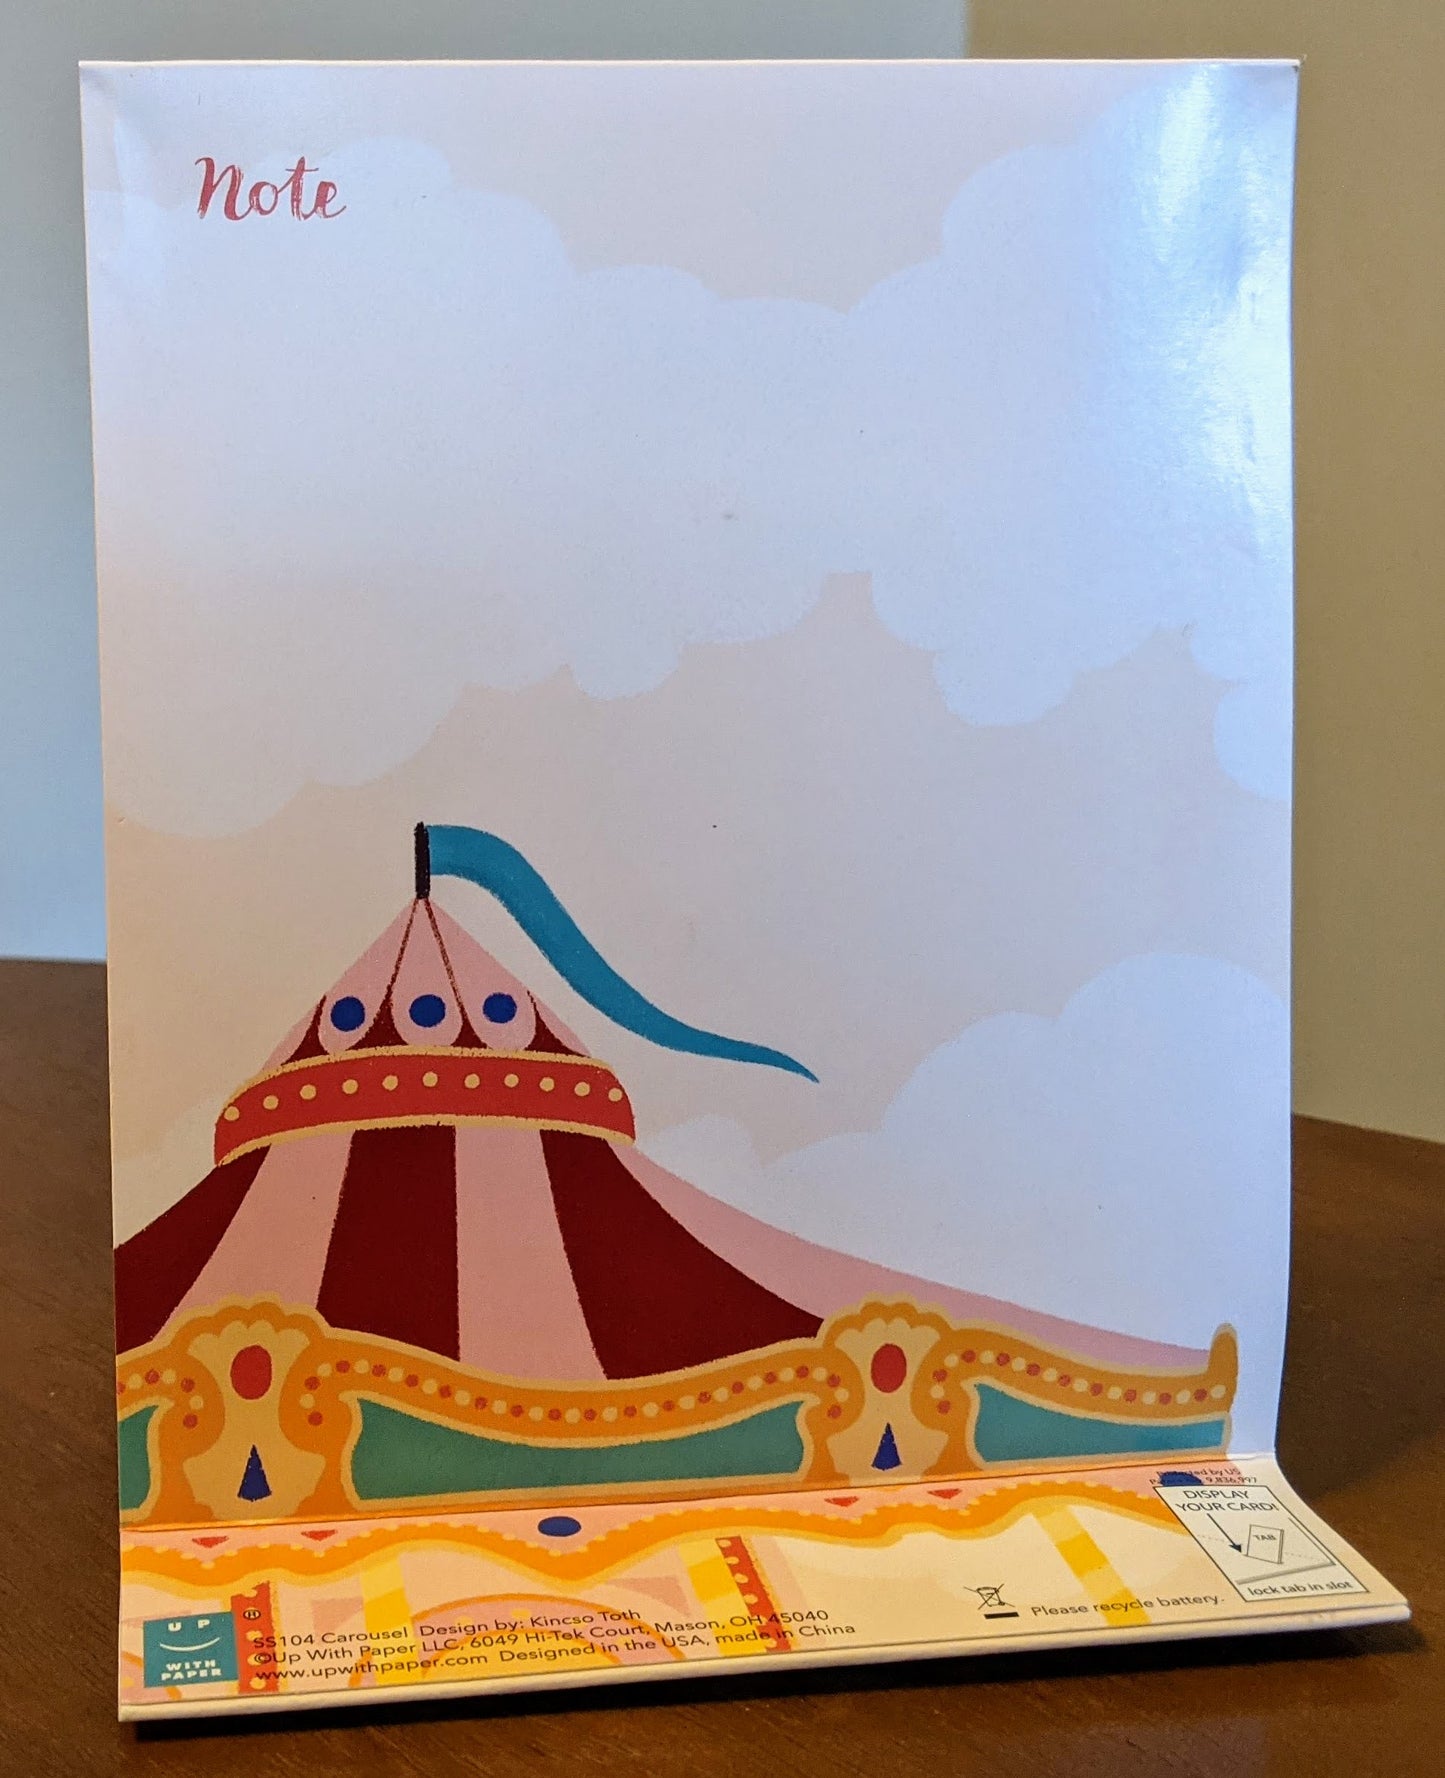 Musical Pop-Up Card - Happy Birthday Carousel